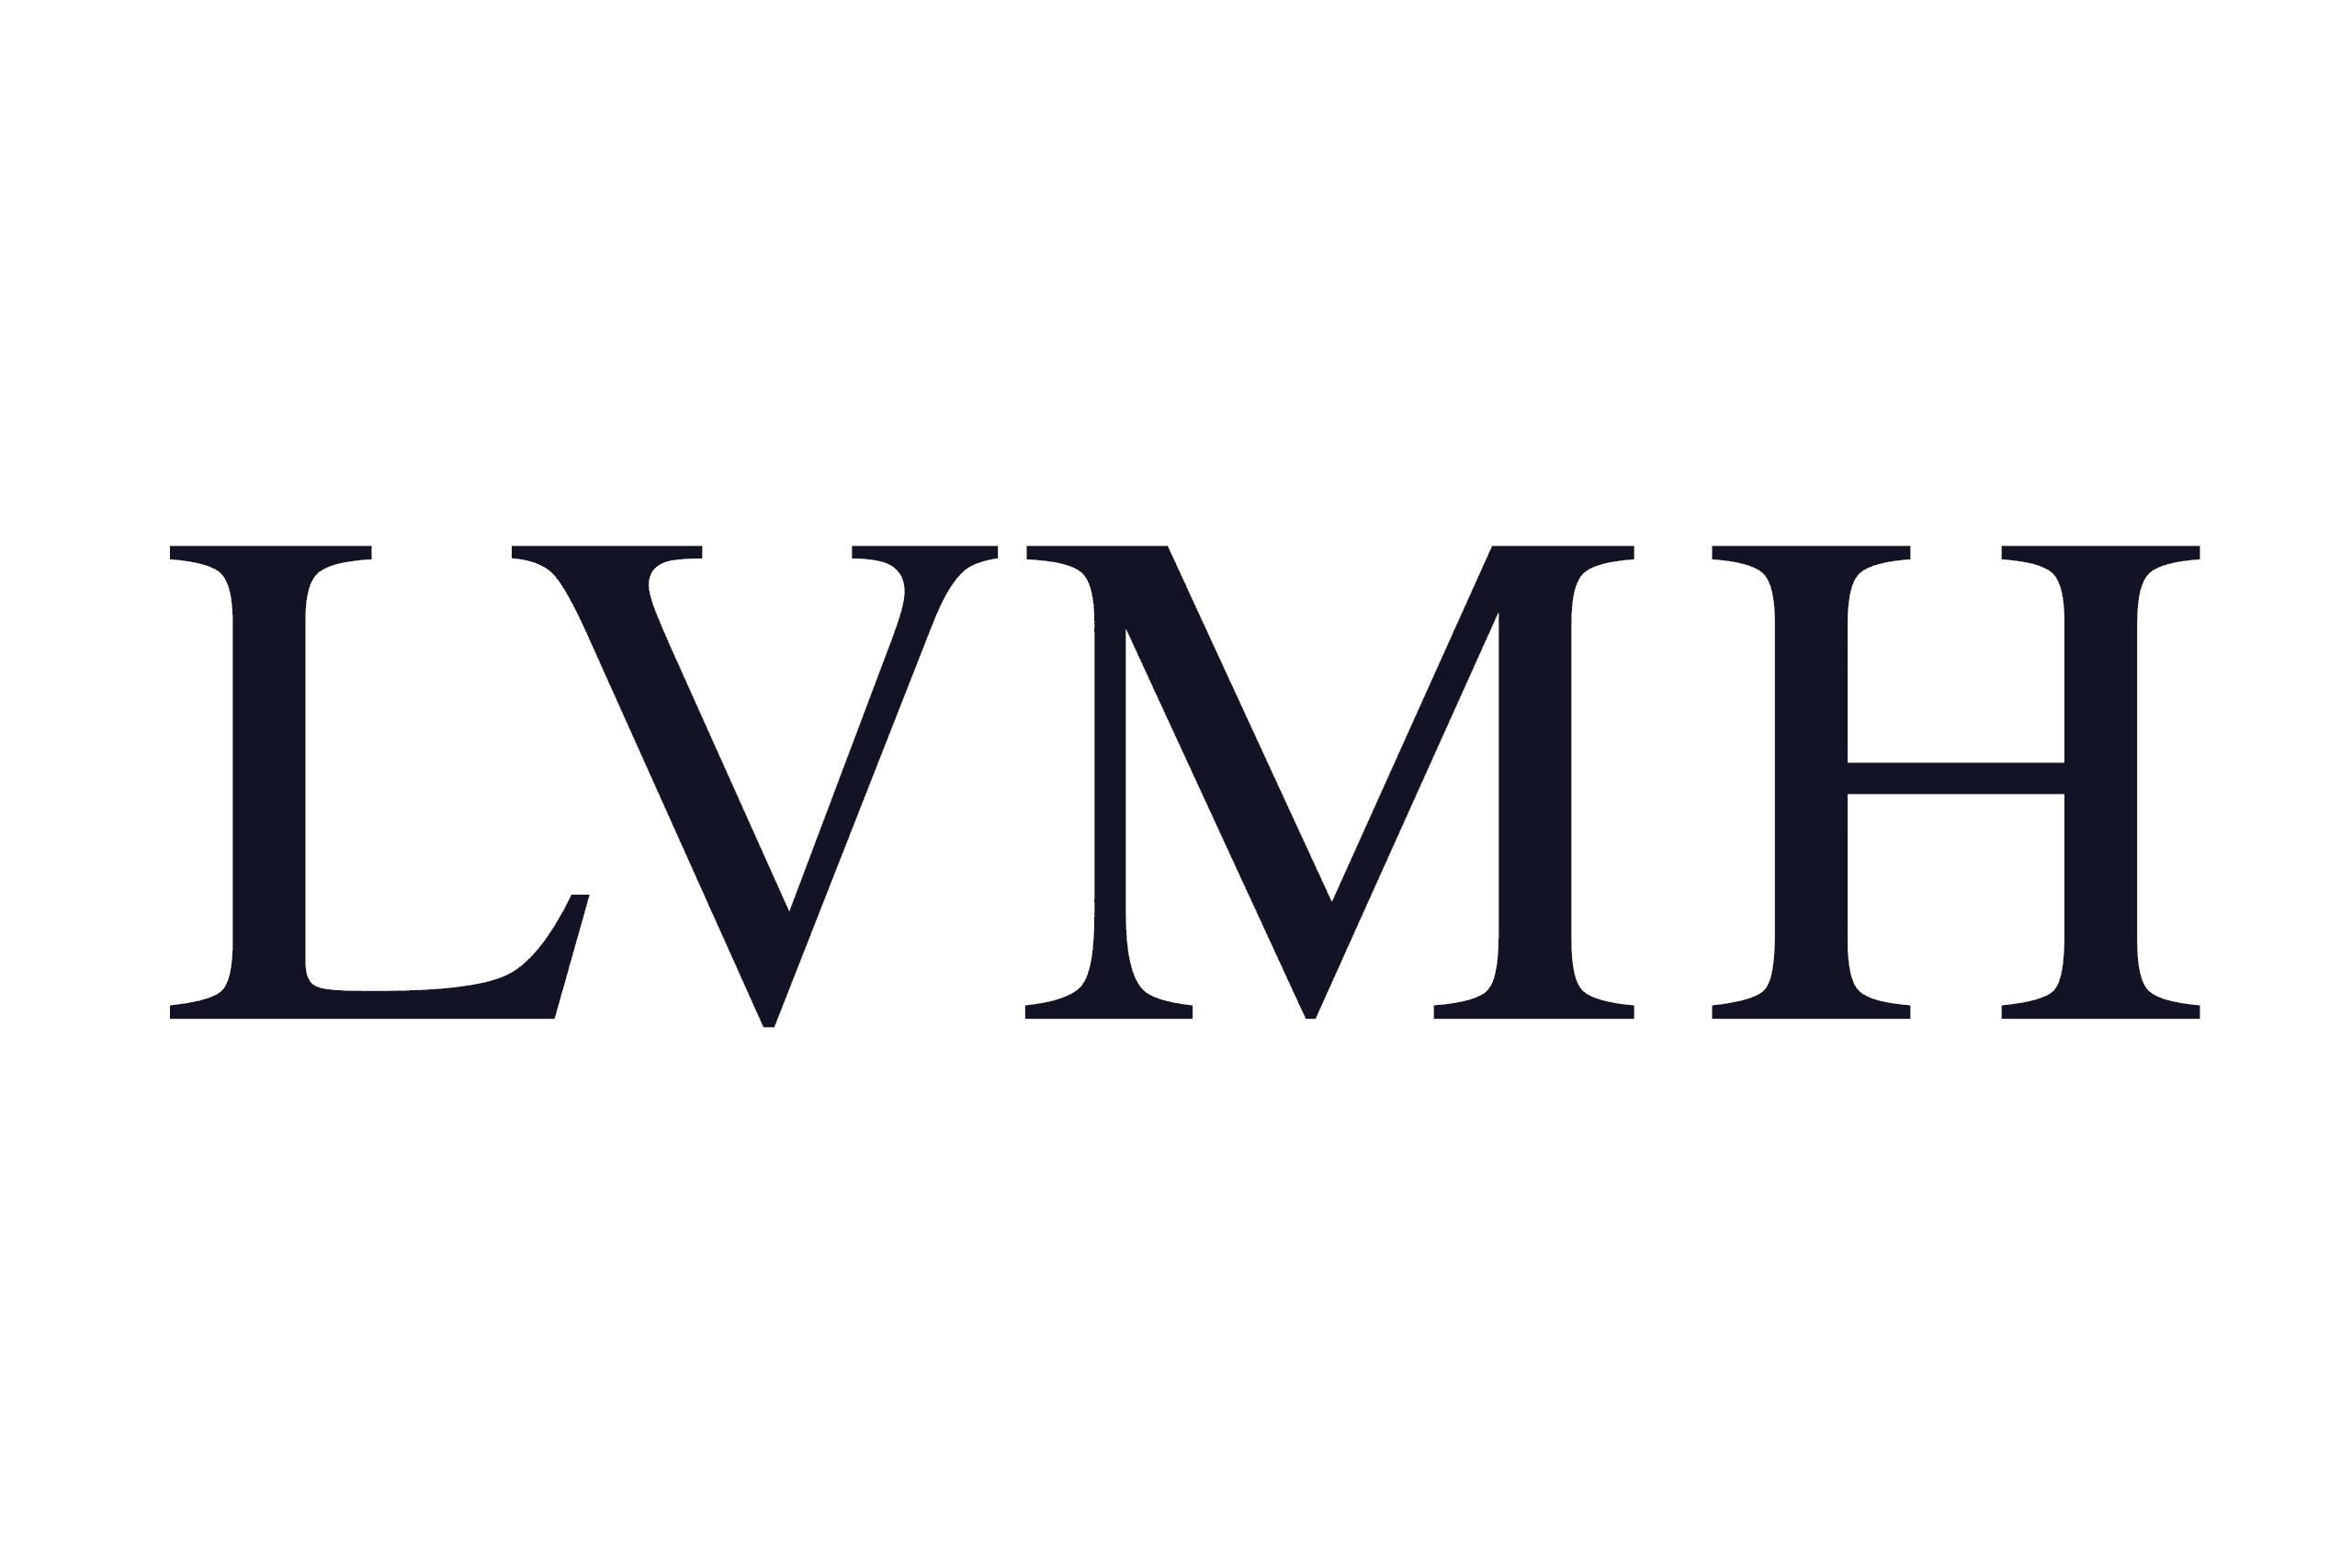 Careers at LVMH Perfumes & Cosmetics